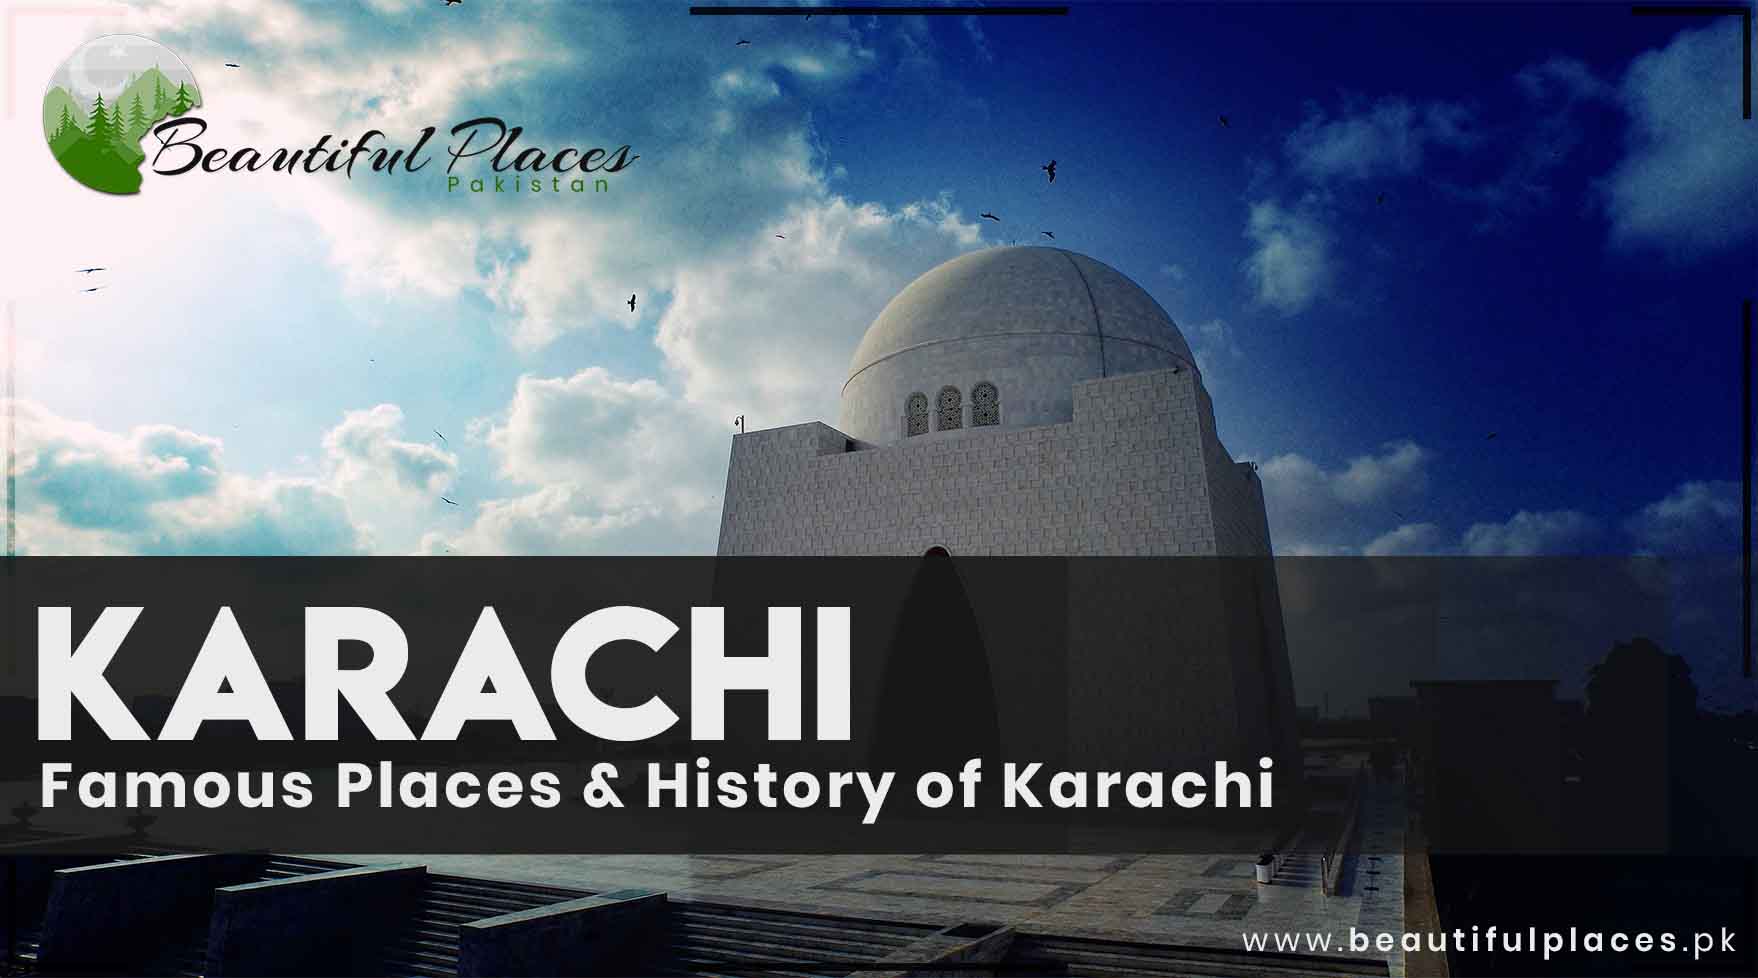 Karachi | Famous Places of Karachi - History of Karachi